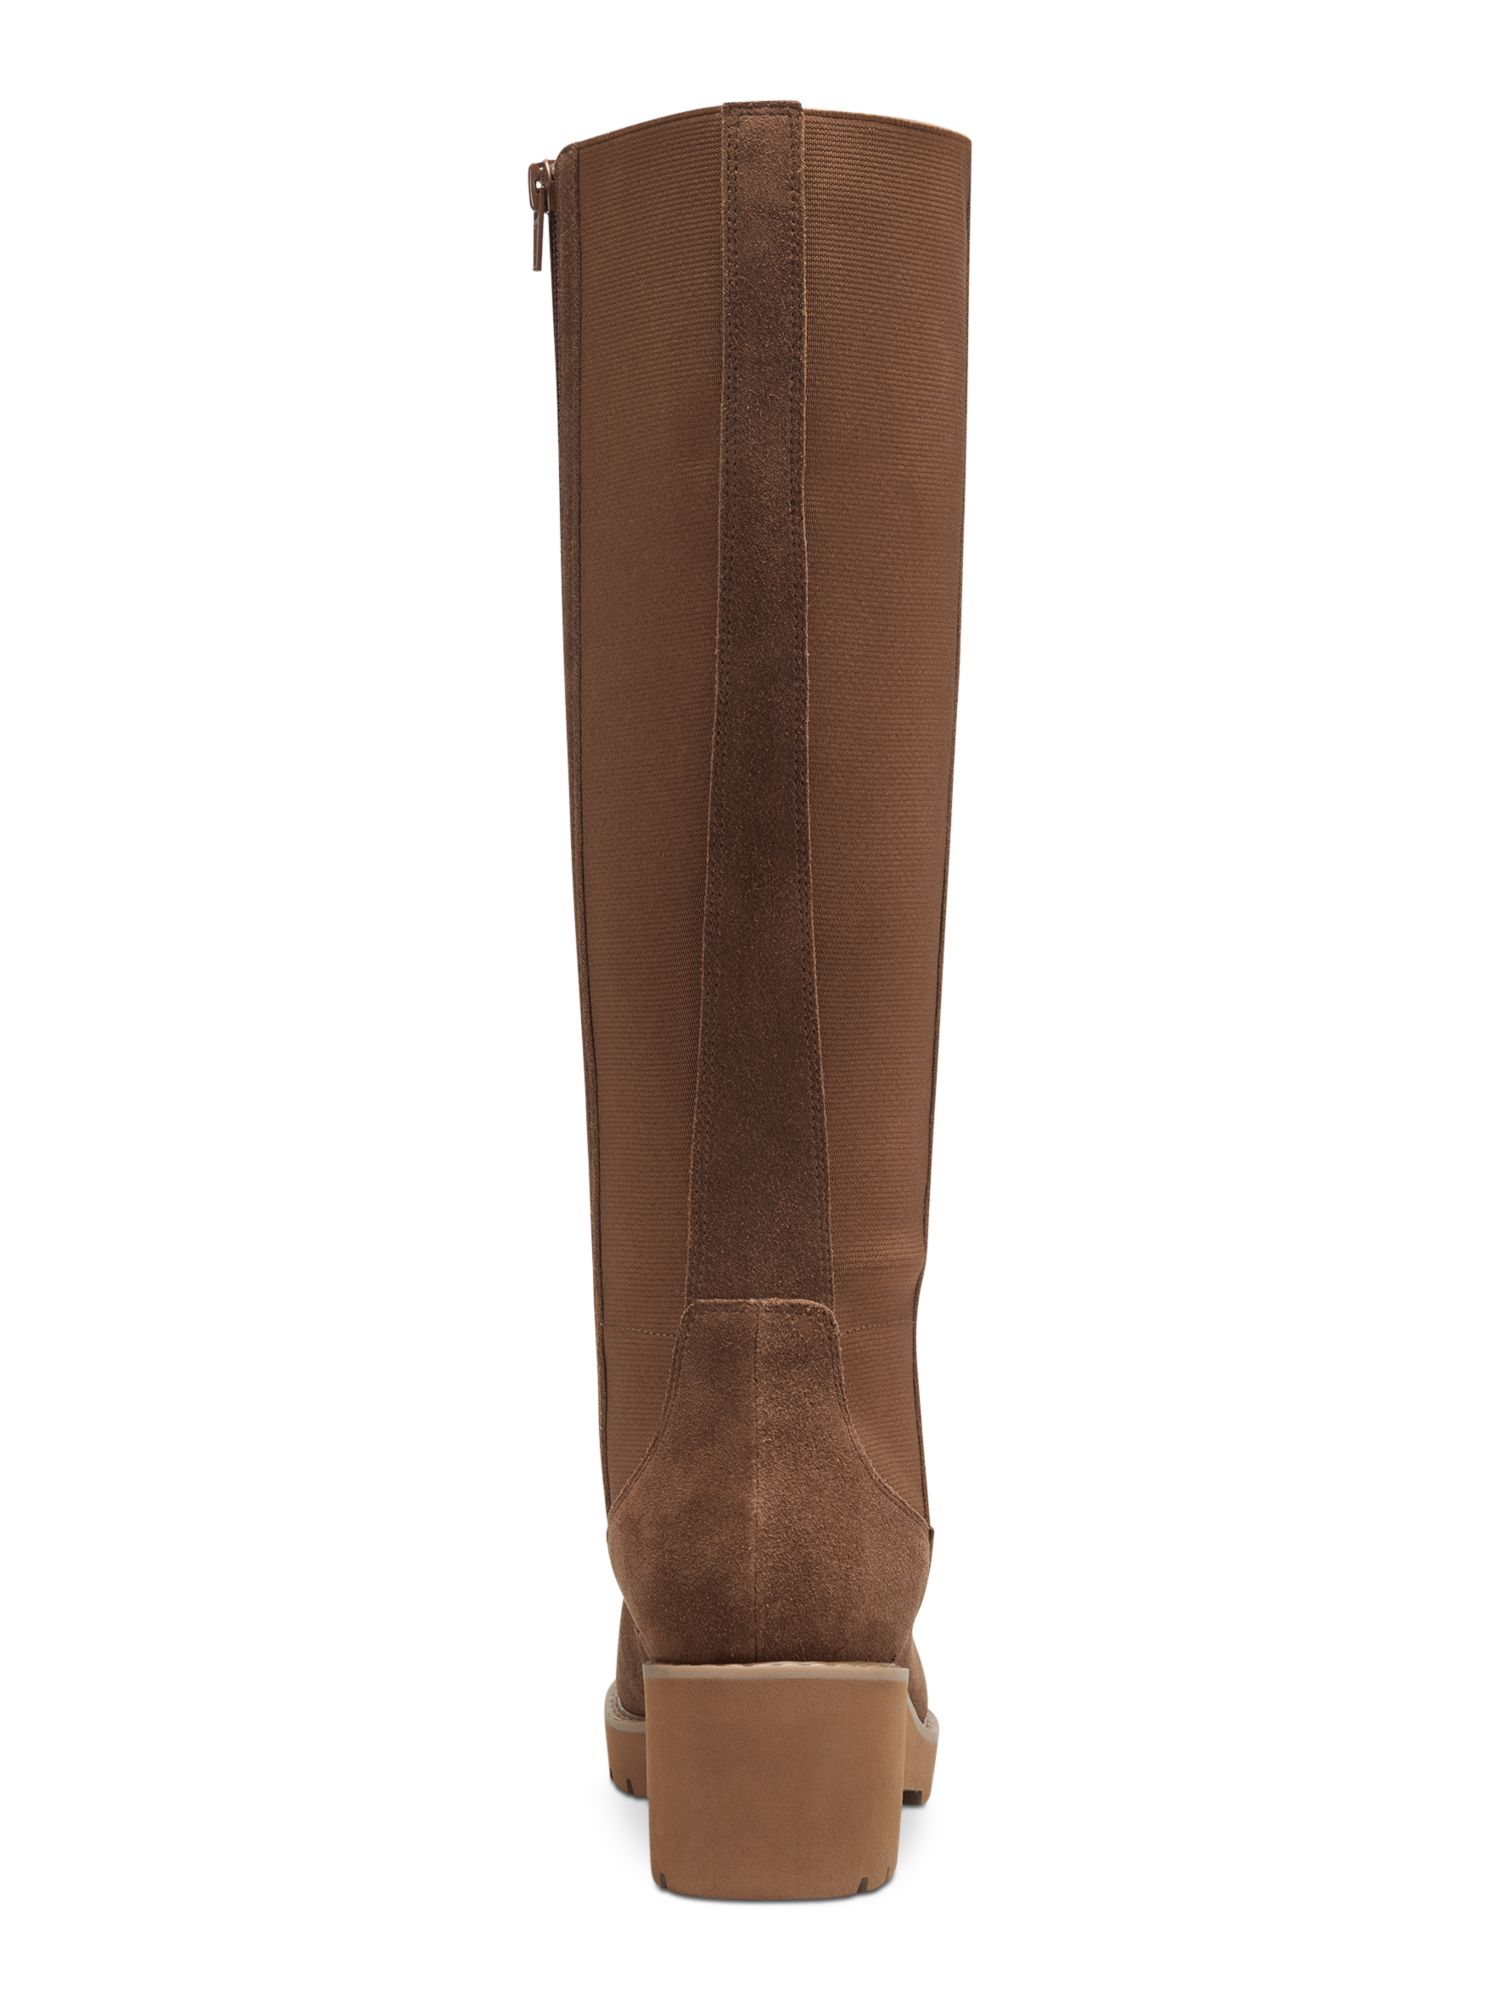 GIANI BERNINI Womens Brown Lug Sole Stretch Valensia Round Toe Block Heel Zip-Up Leather Riding Boot 10 M